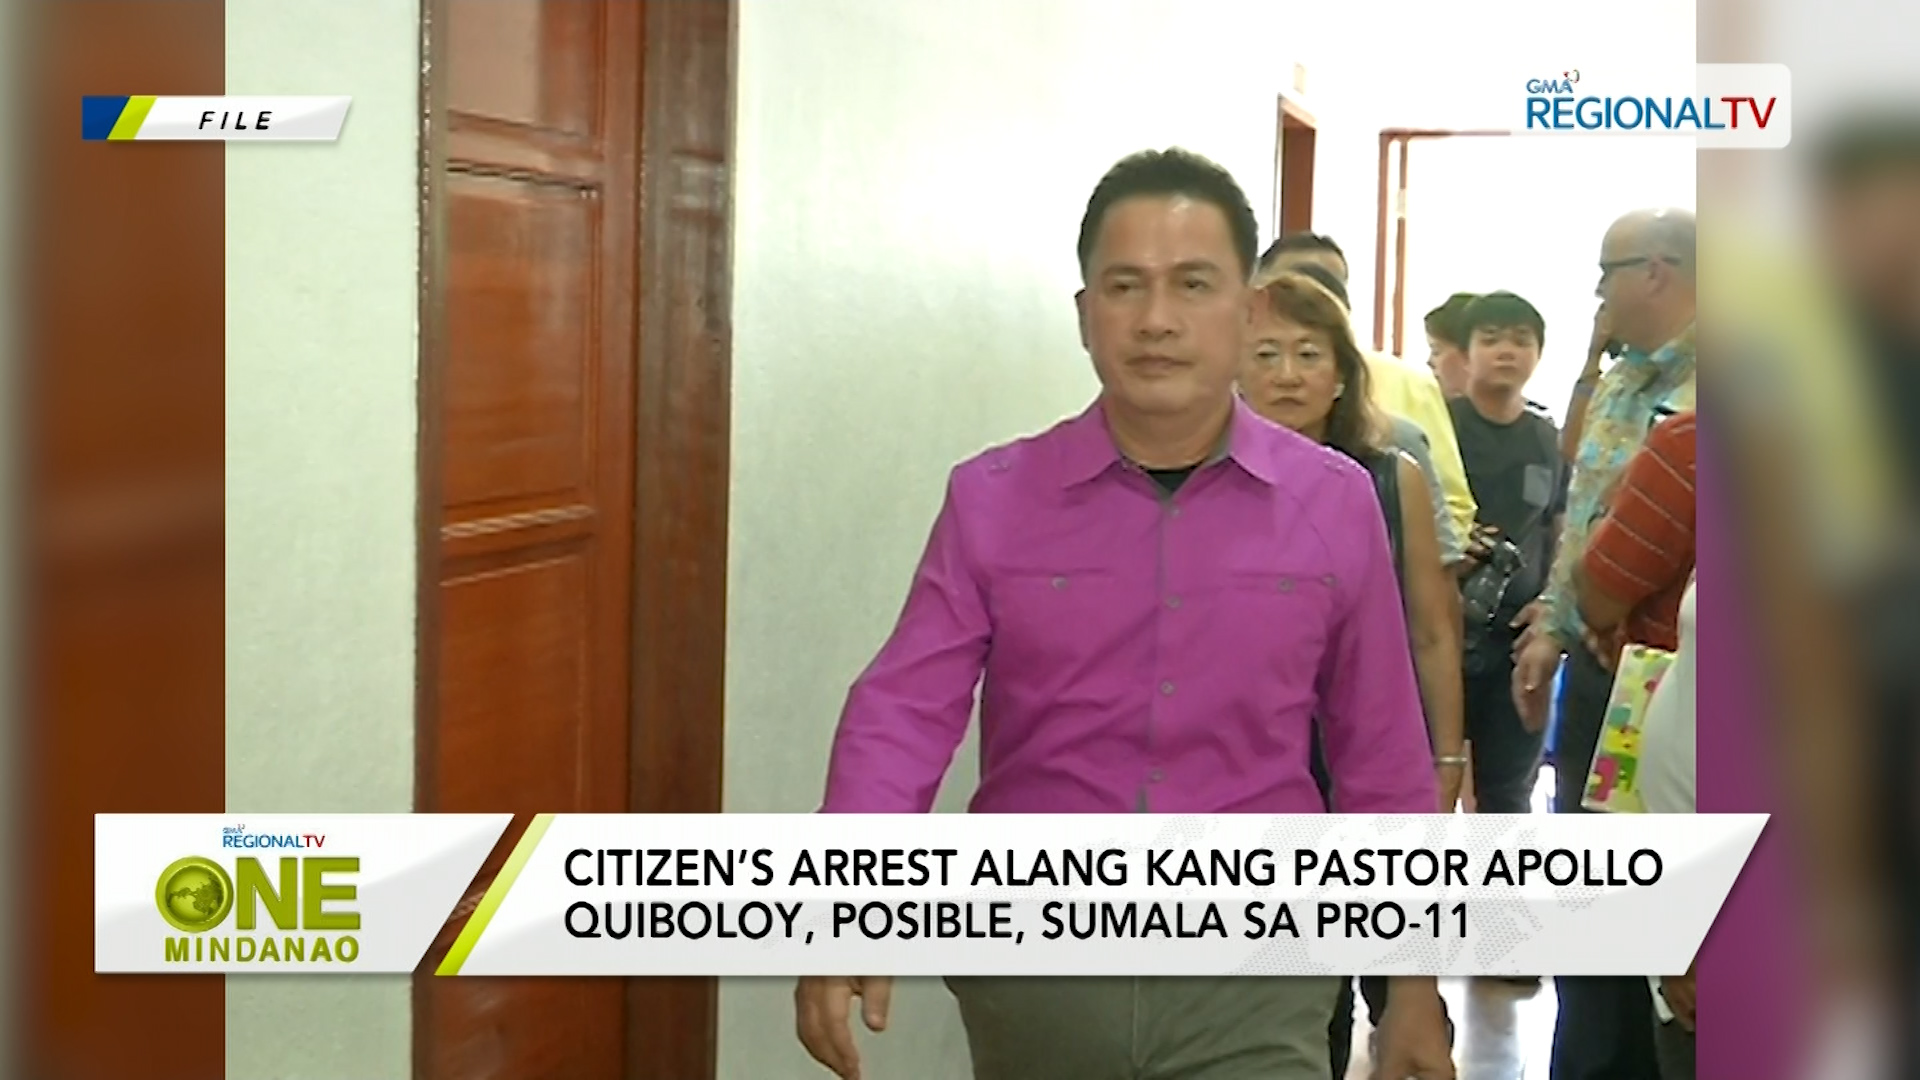 Citizen’s arrest alang kang Quiboloy, posible, sumala sa PRO-11